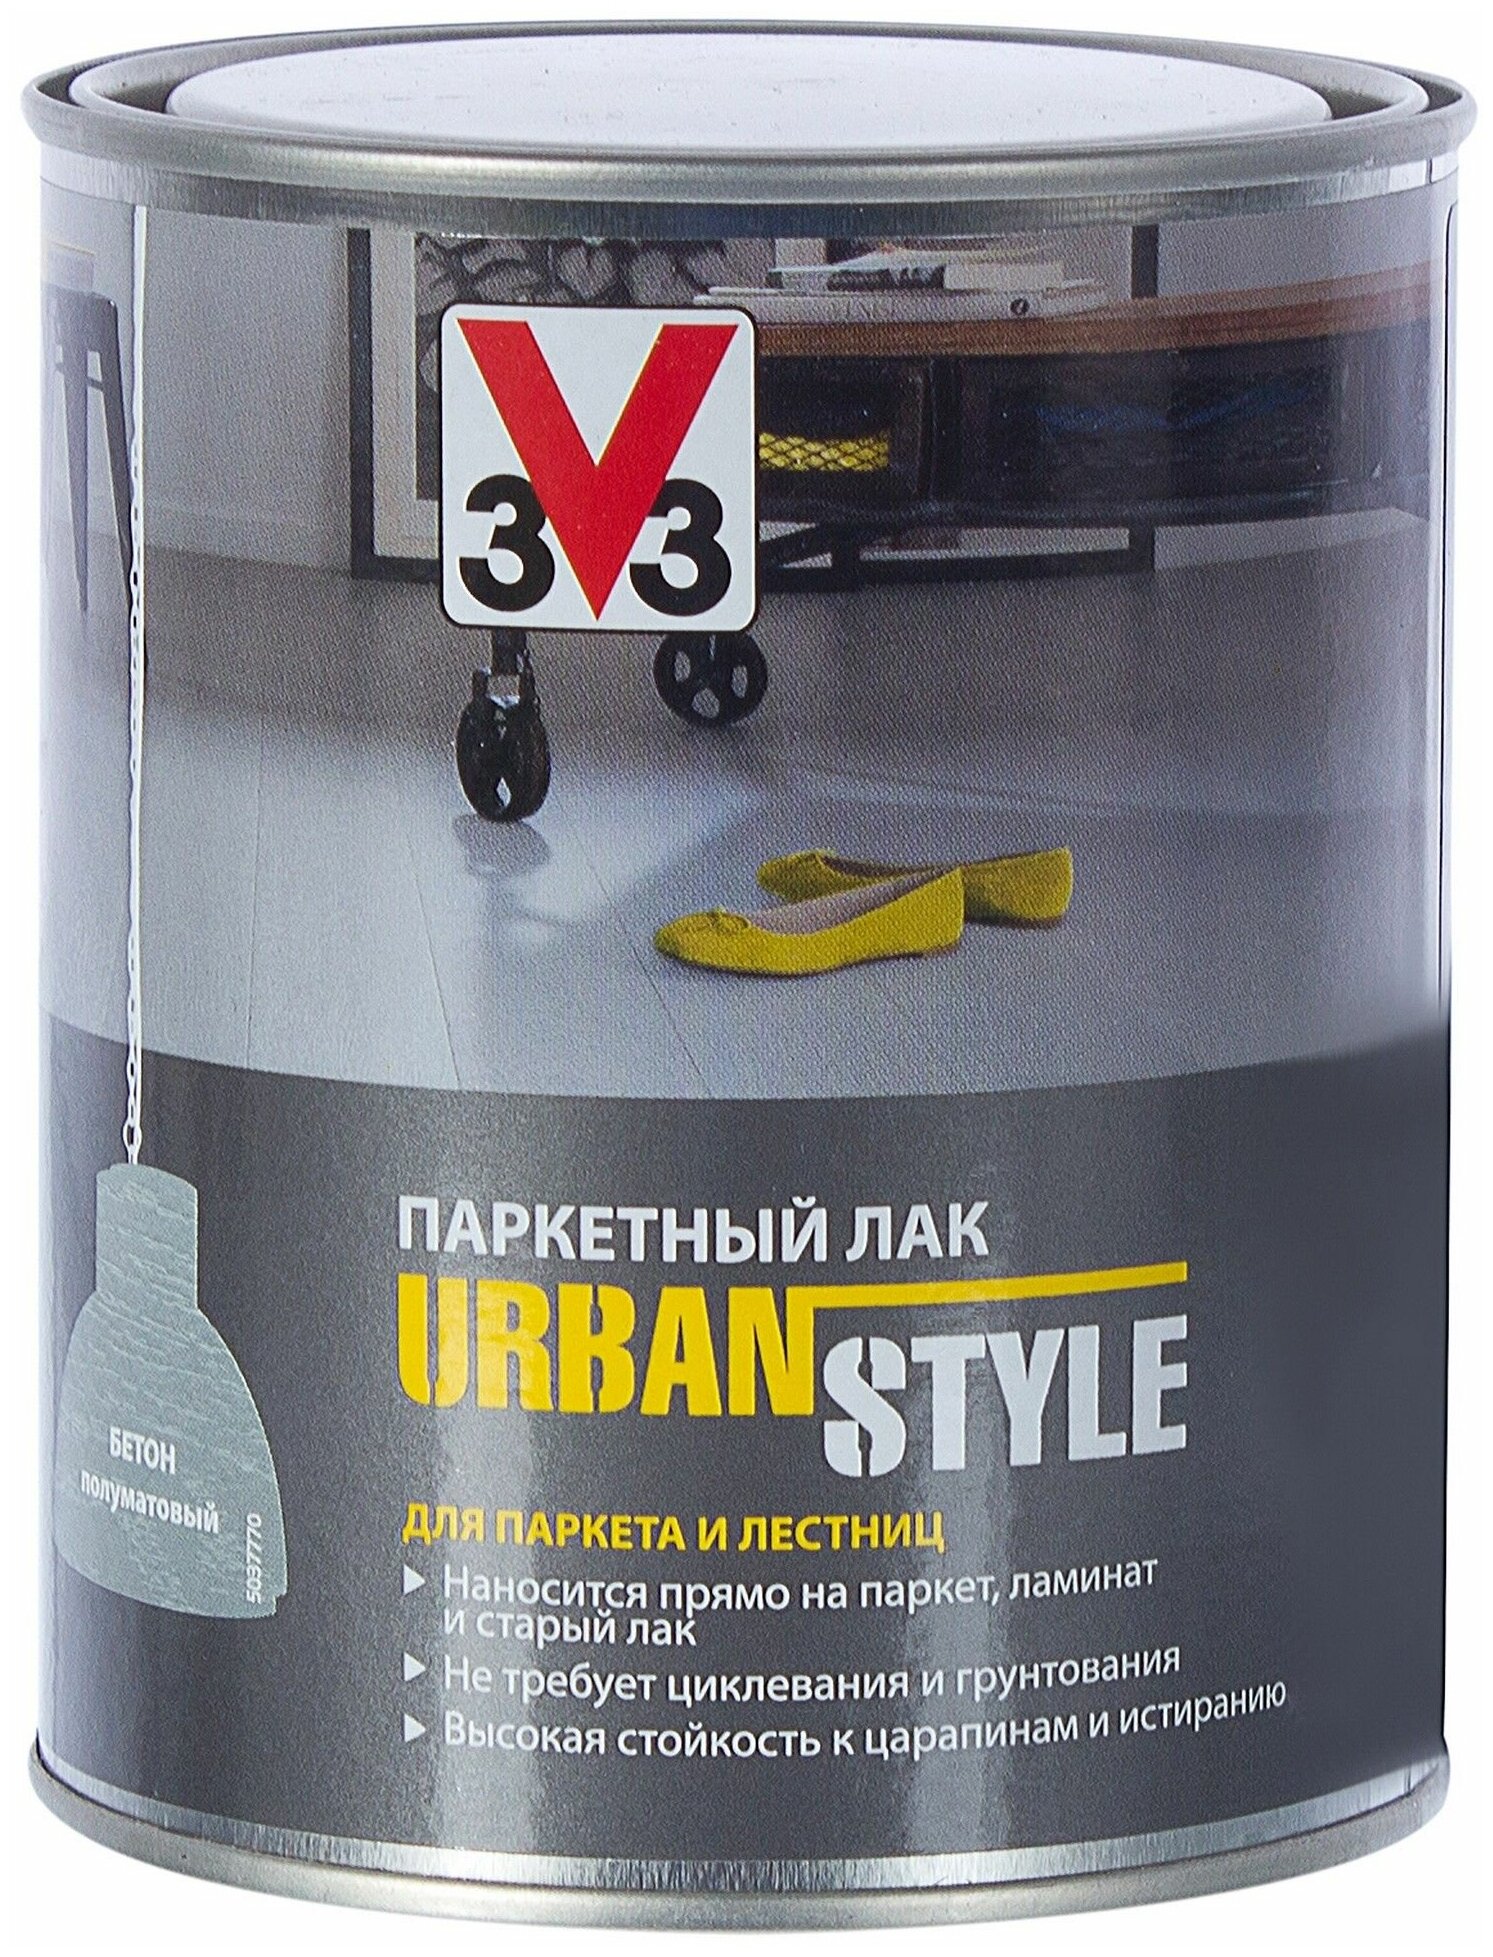 Лак V33 Urban style цвет бетон 0.75 л